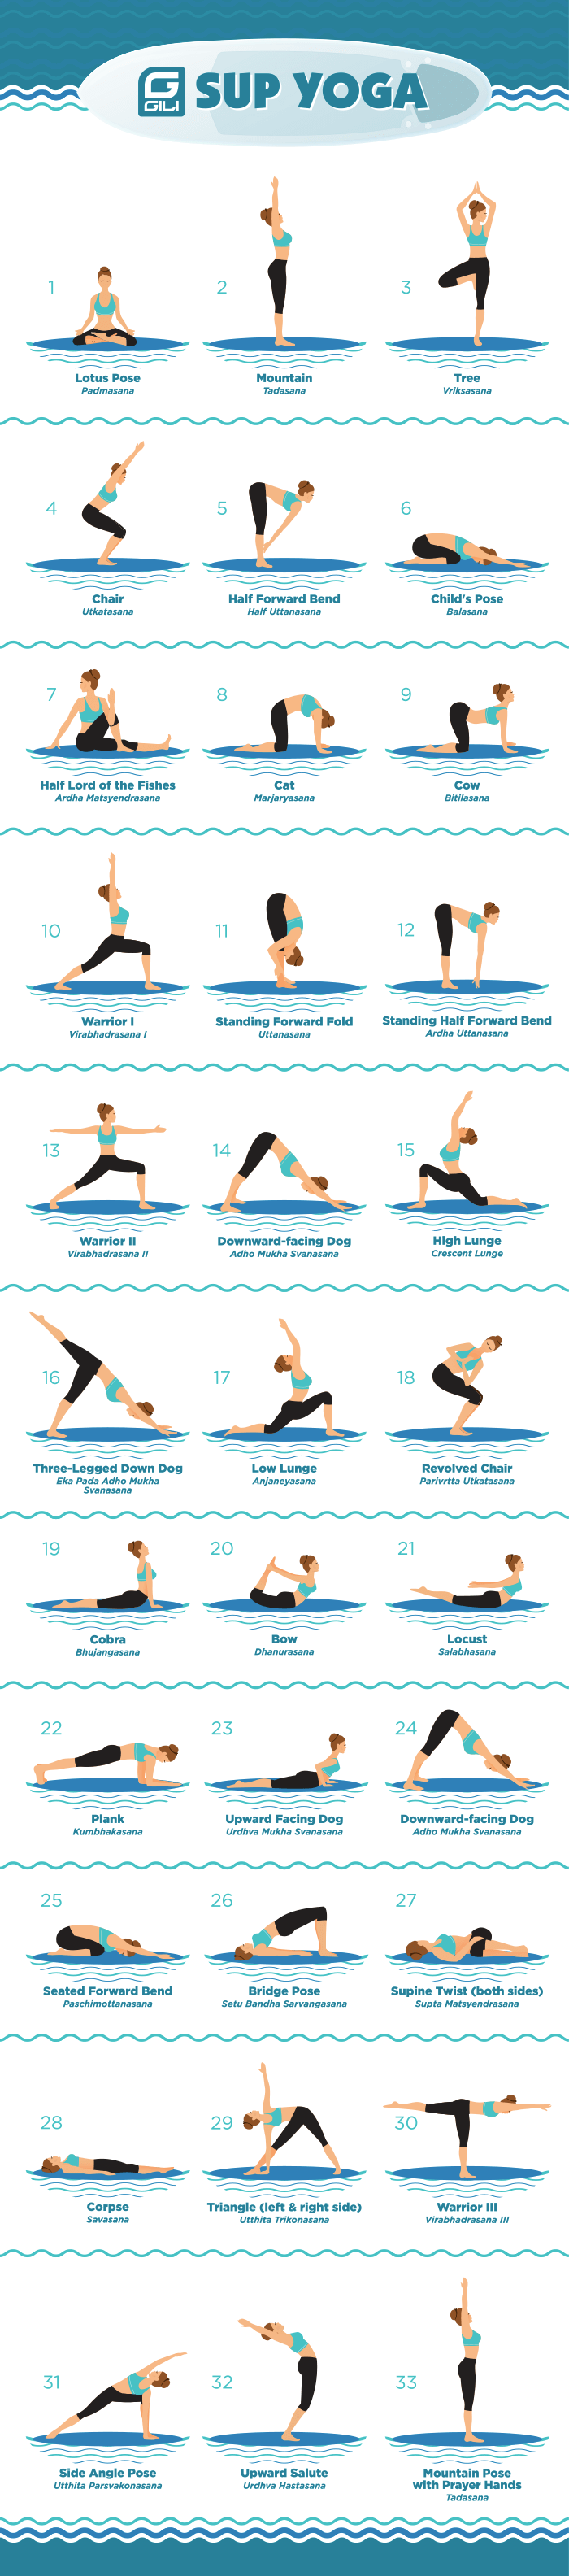 Sample SUP Yoga Routine